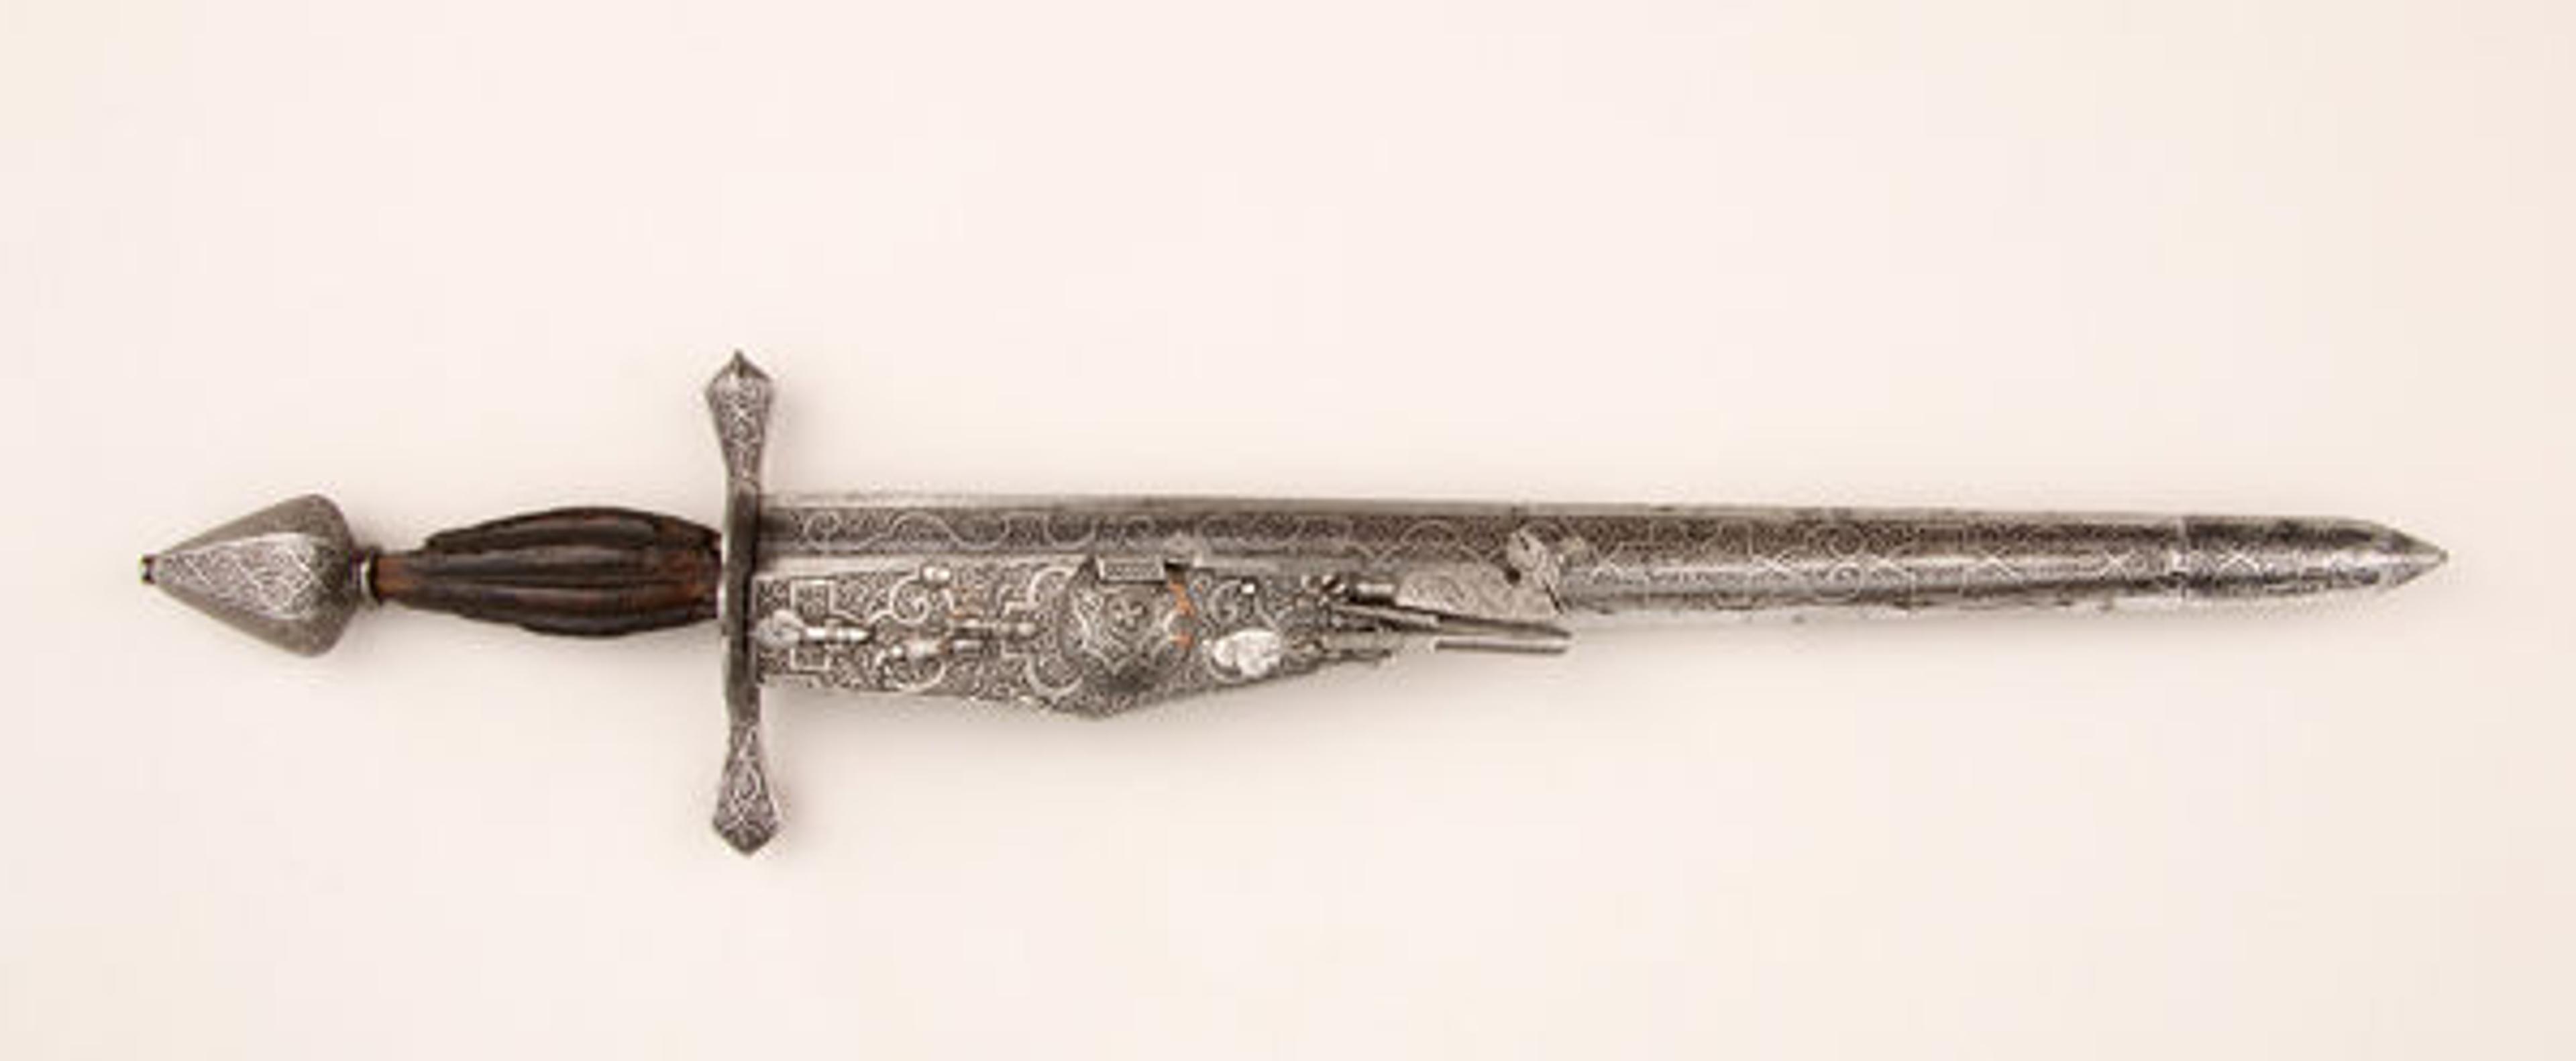 Combination dagger and wheellock pistol